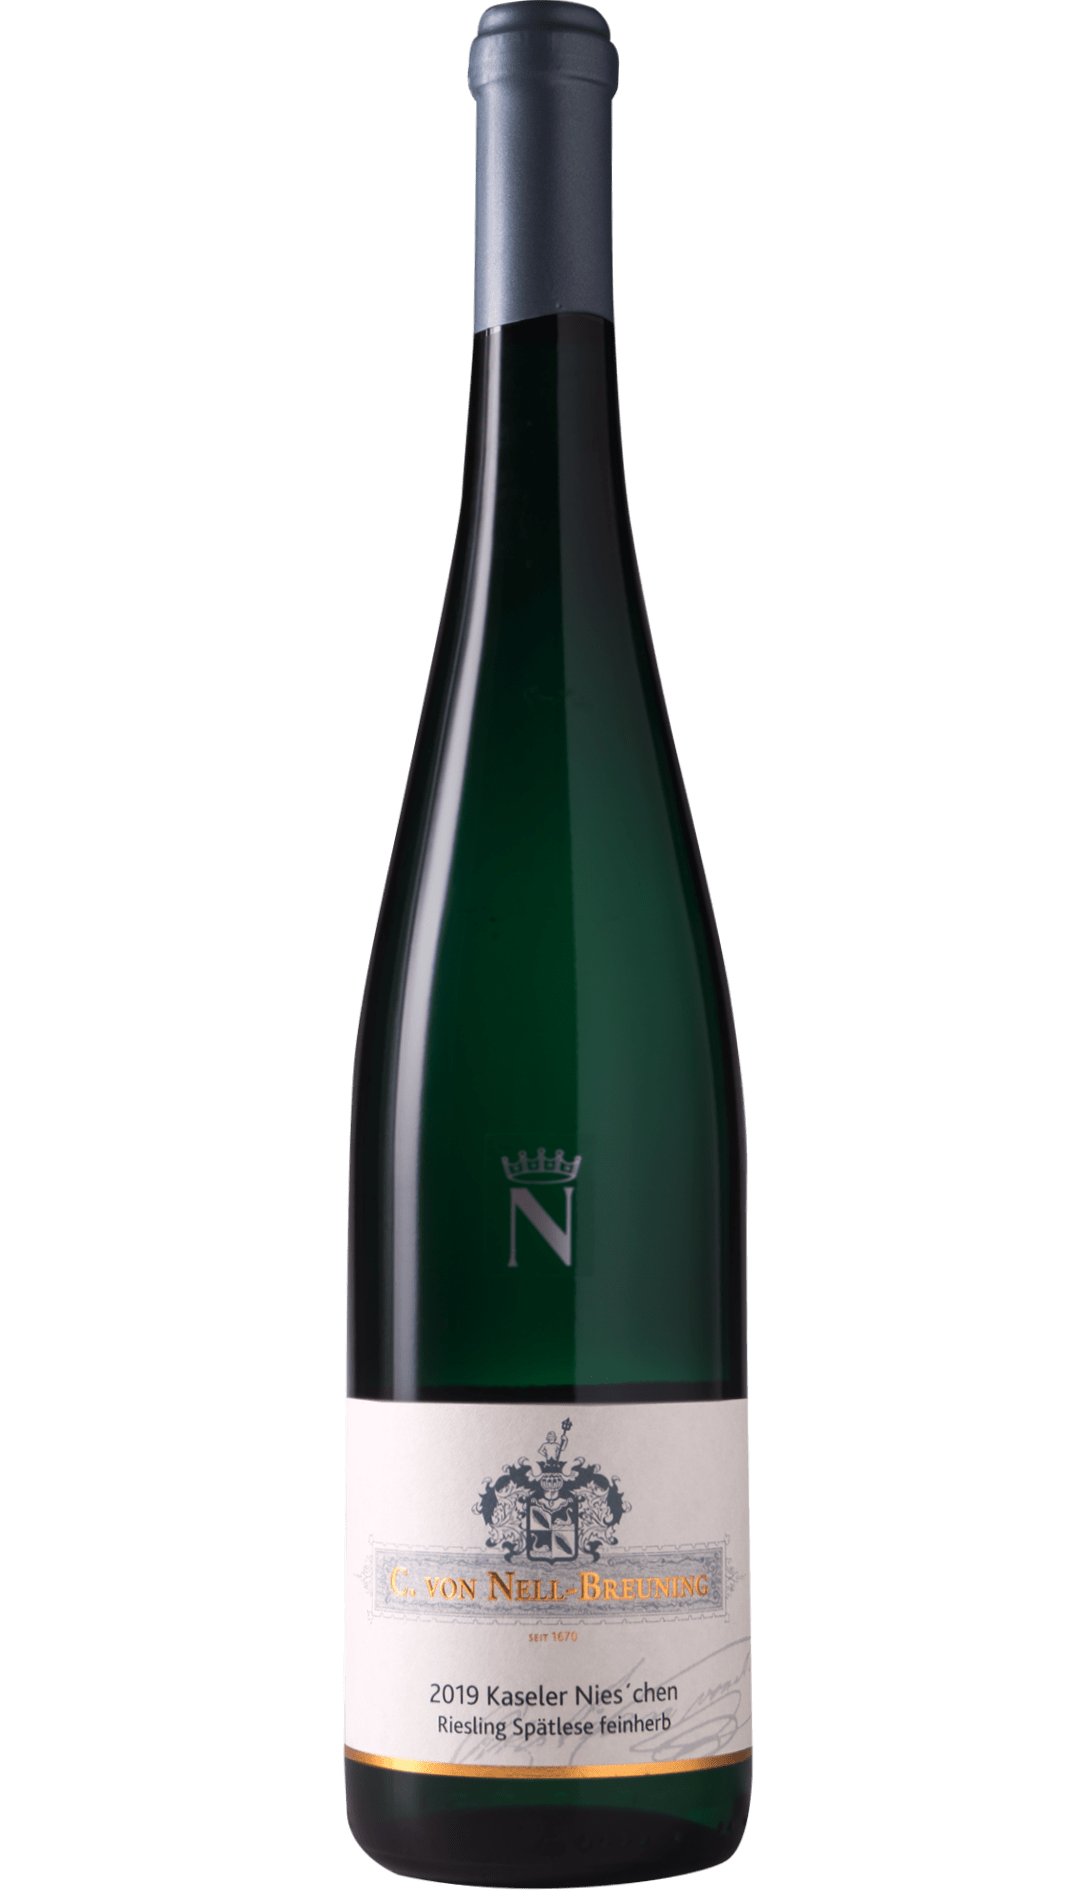 Weingut C. von Nell-Breuning Kaseler Nies'chen Riesling Spatlese Feinherb 2019 (Off-Dry Style)